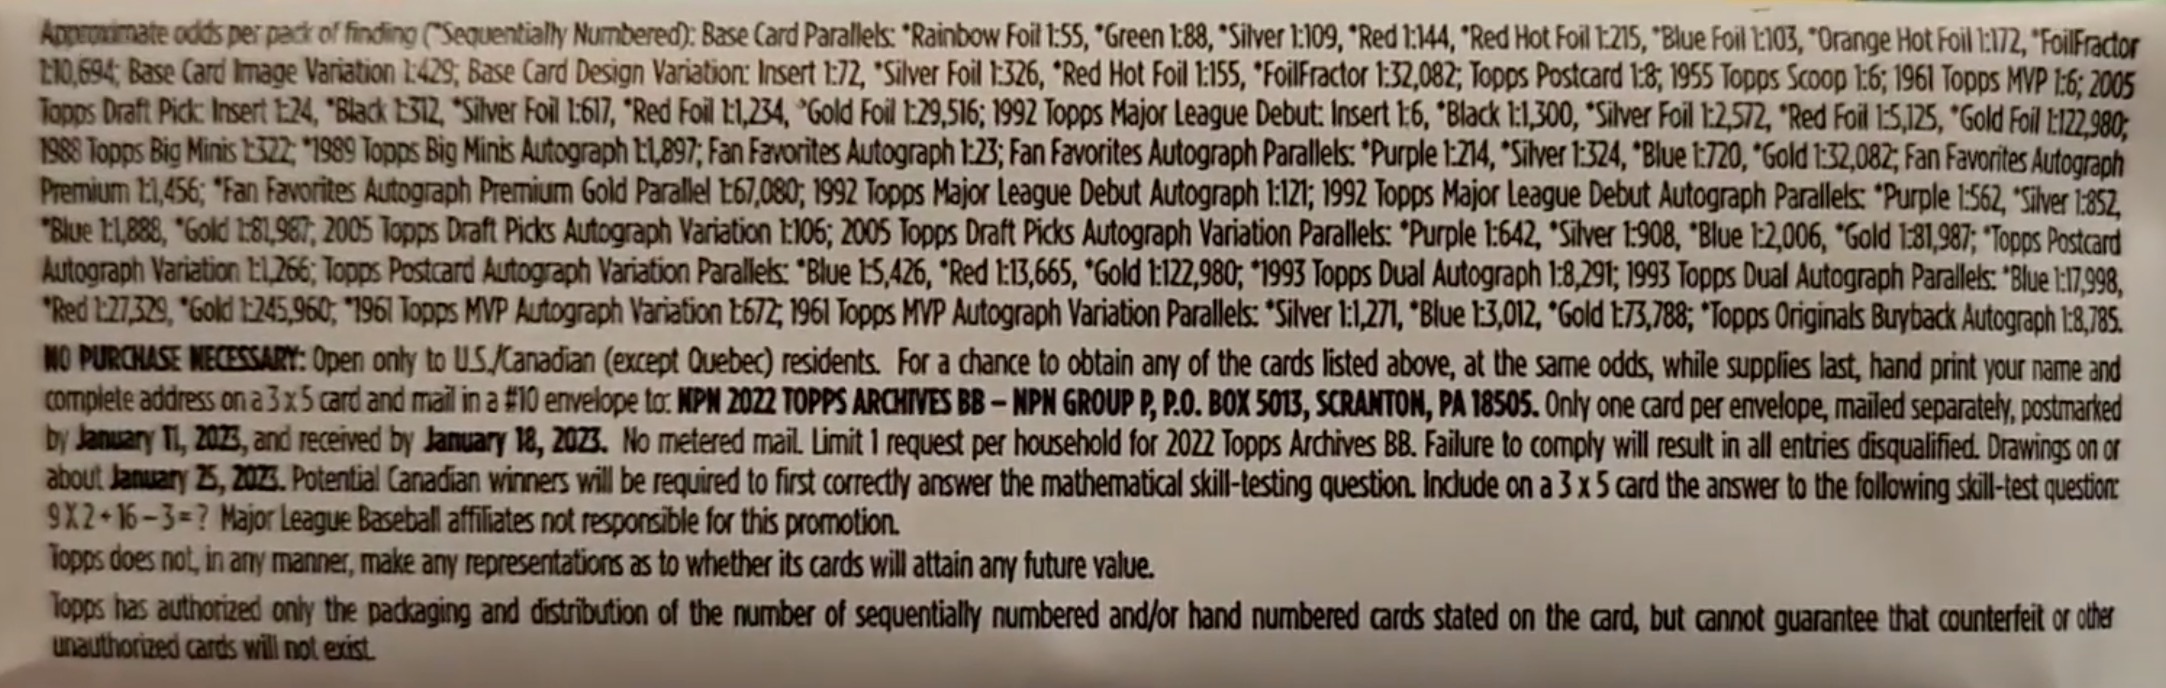 2022 Topps Archives Baseball Cards - Hobby Box - No Purchase Necessary (NPN) Information